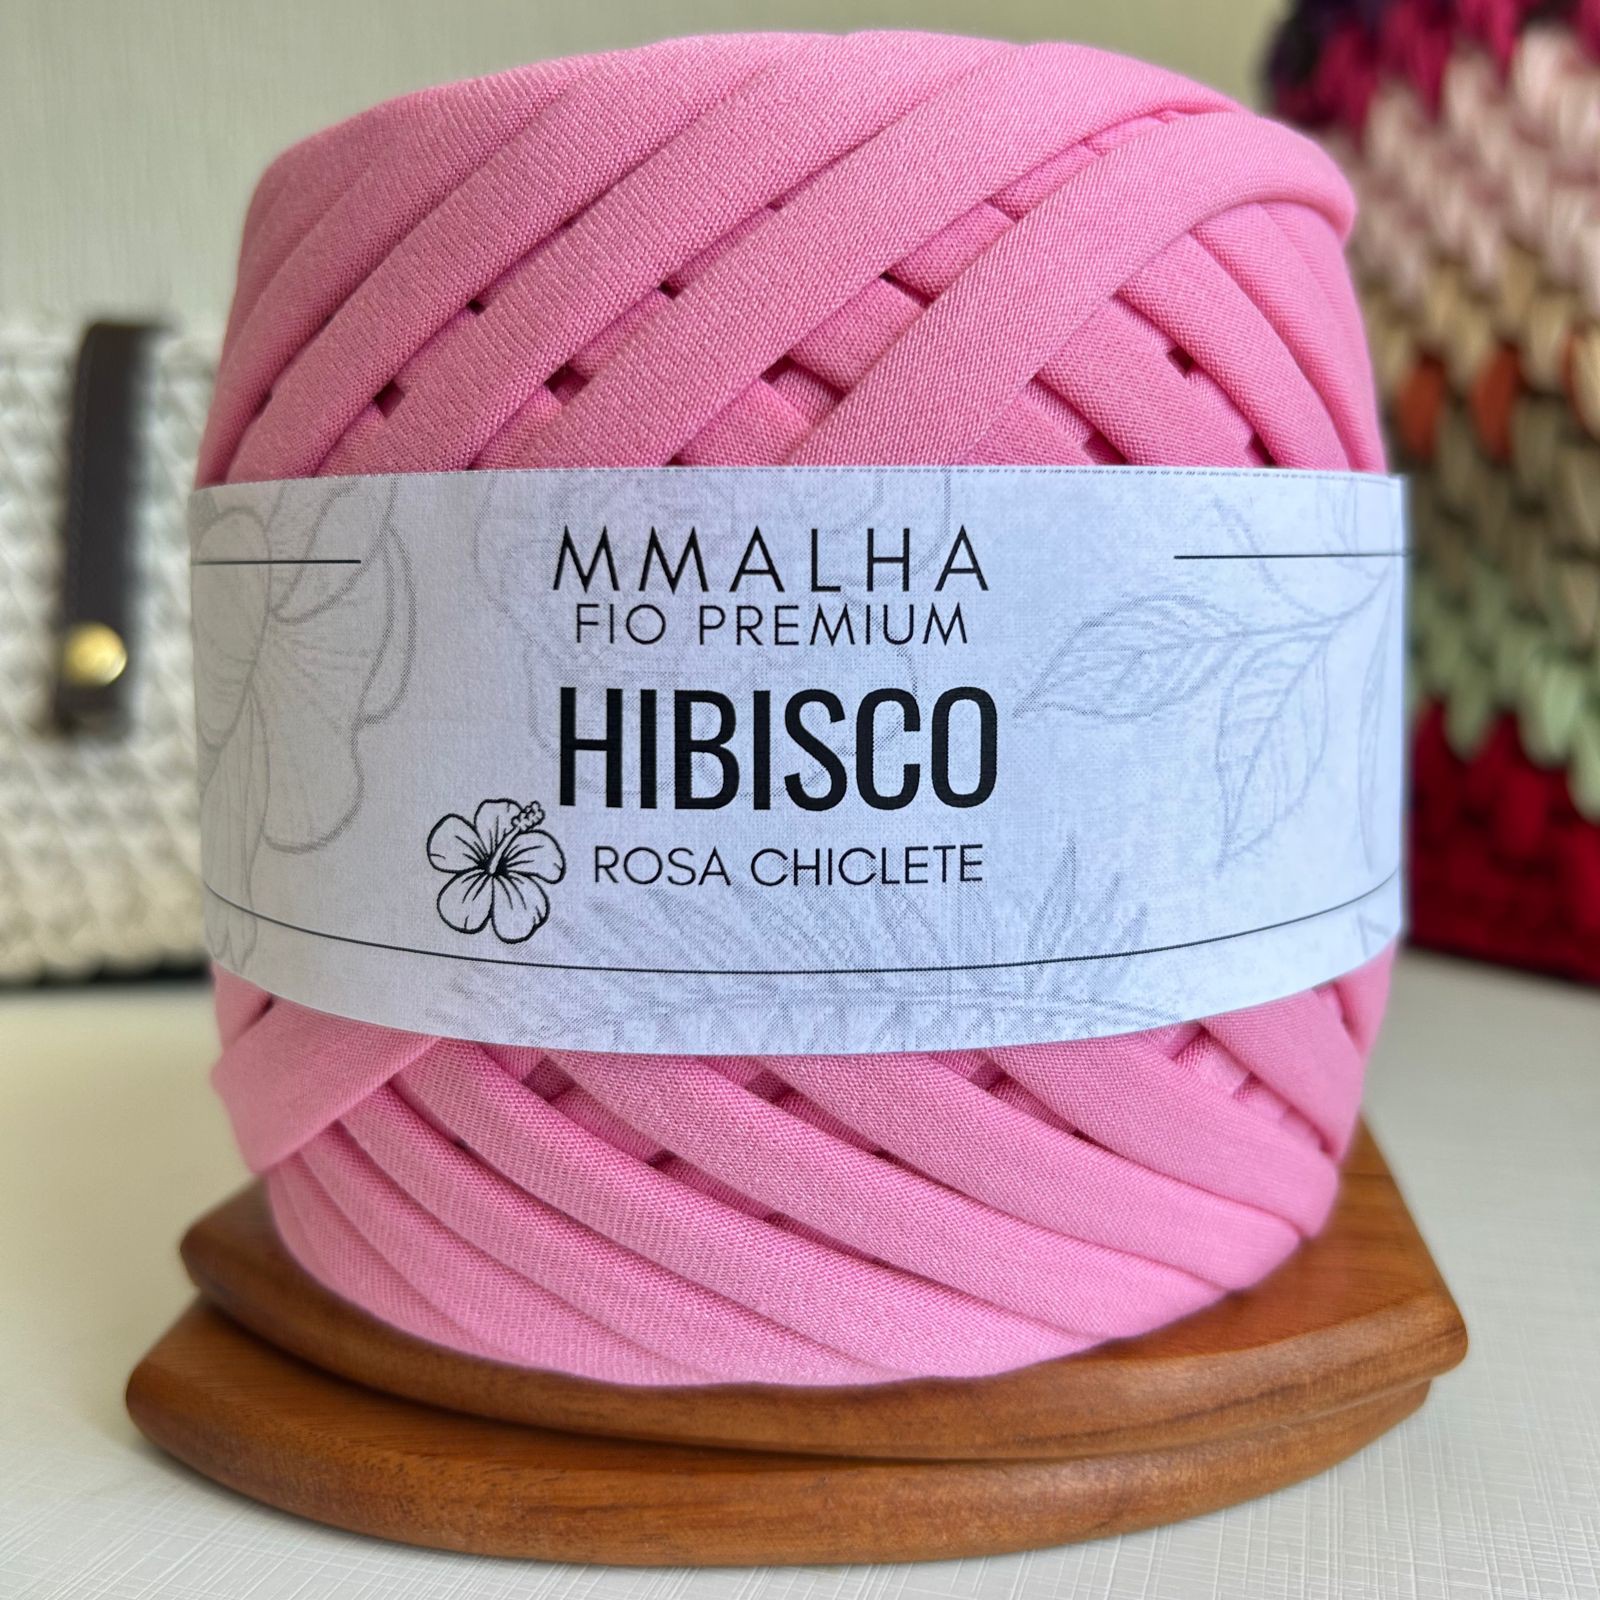 Fio de Malha Premium - Hibisco - Rosa Chiclete - MMalha